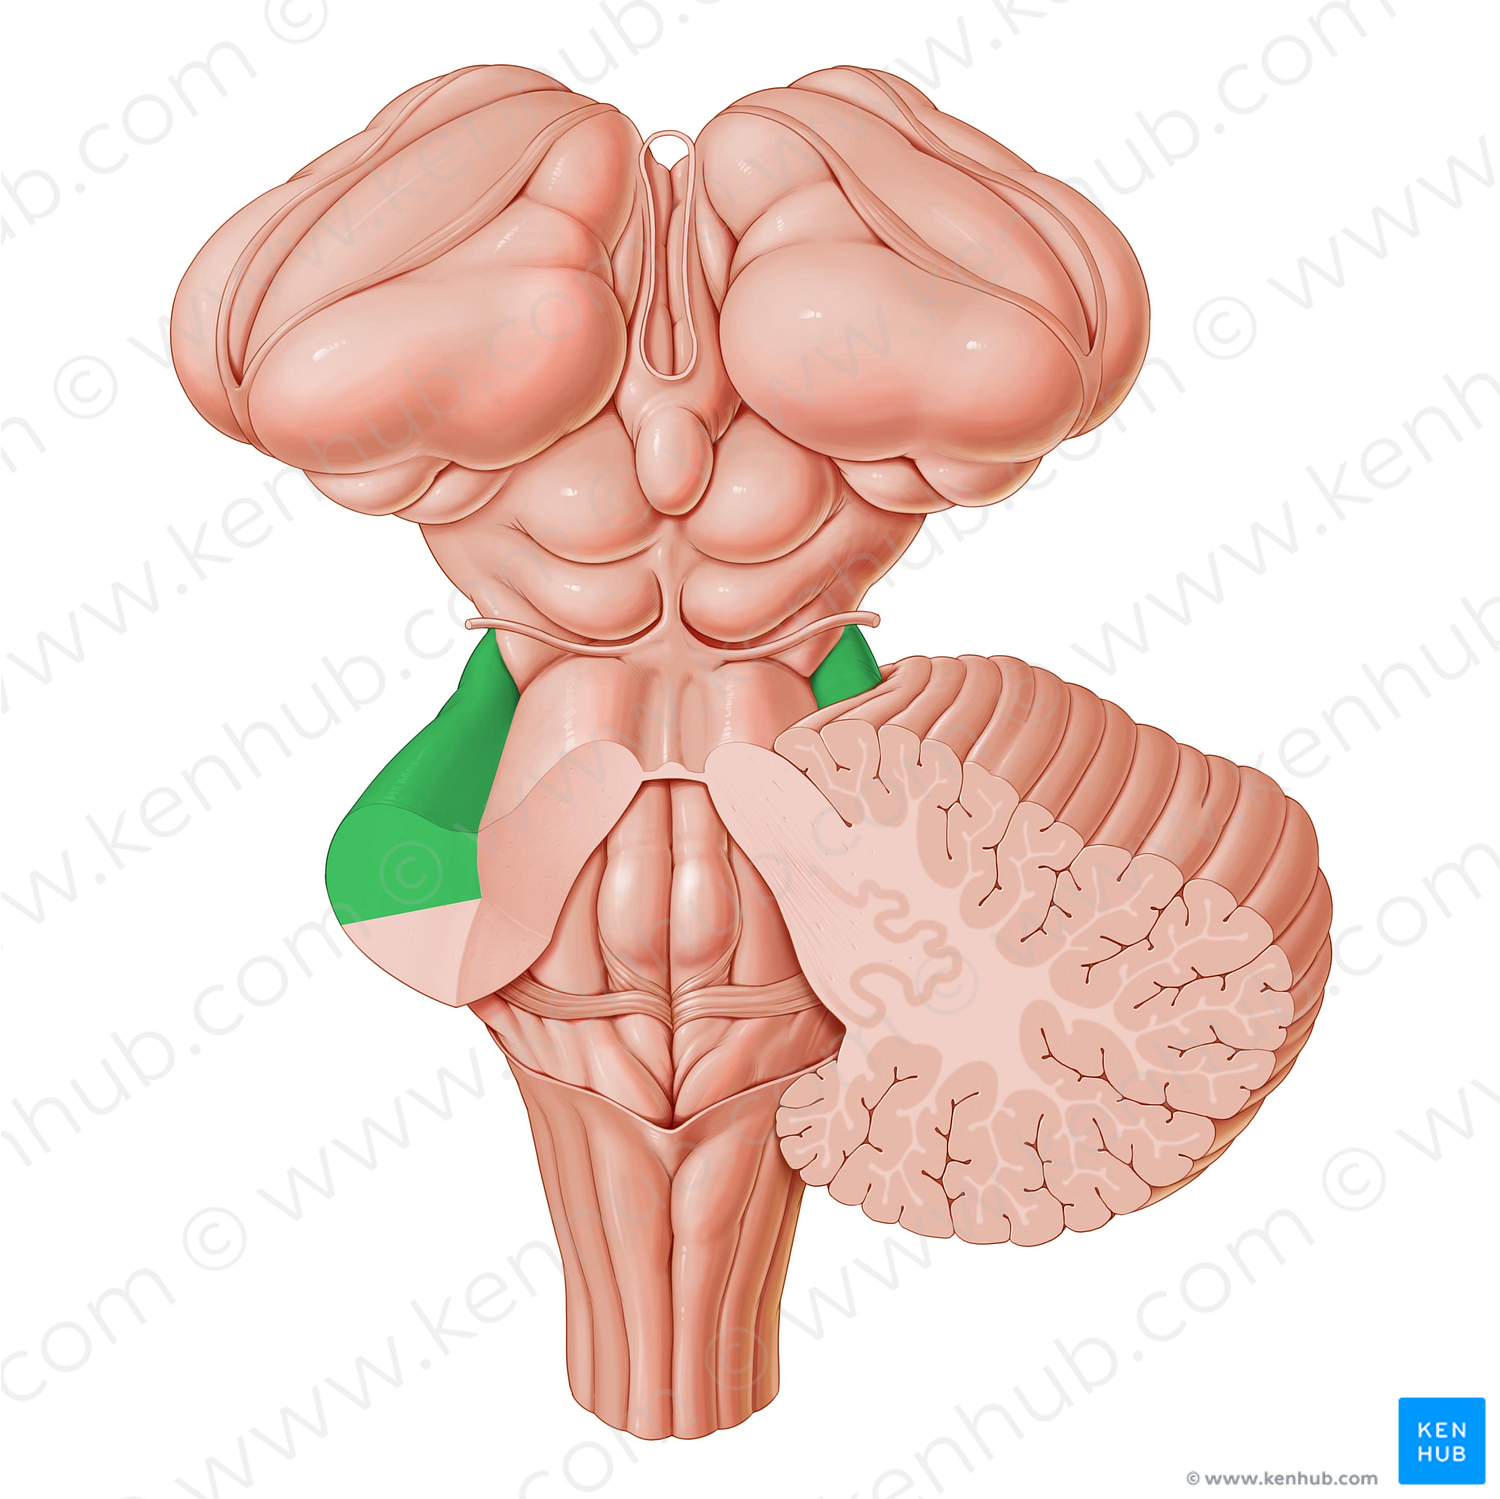 Middle cerebellar peduncle (#7833)